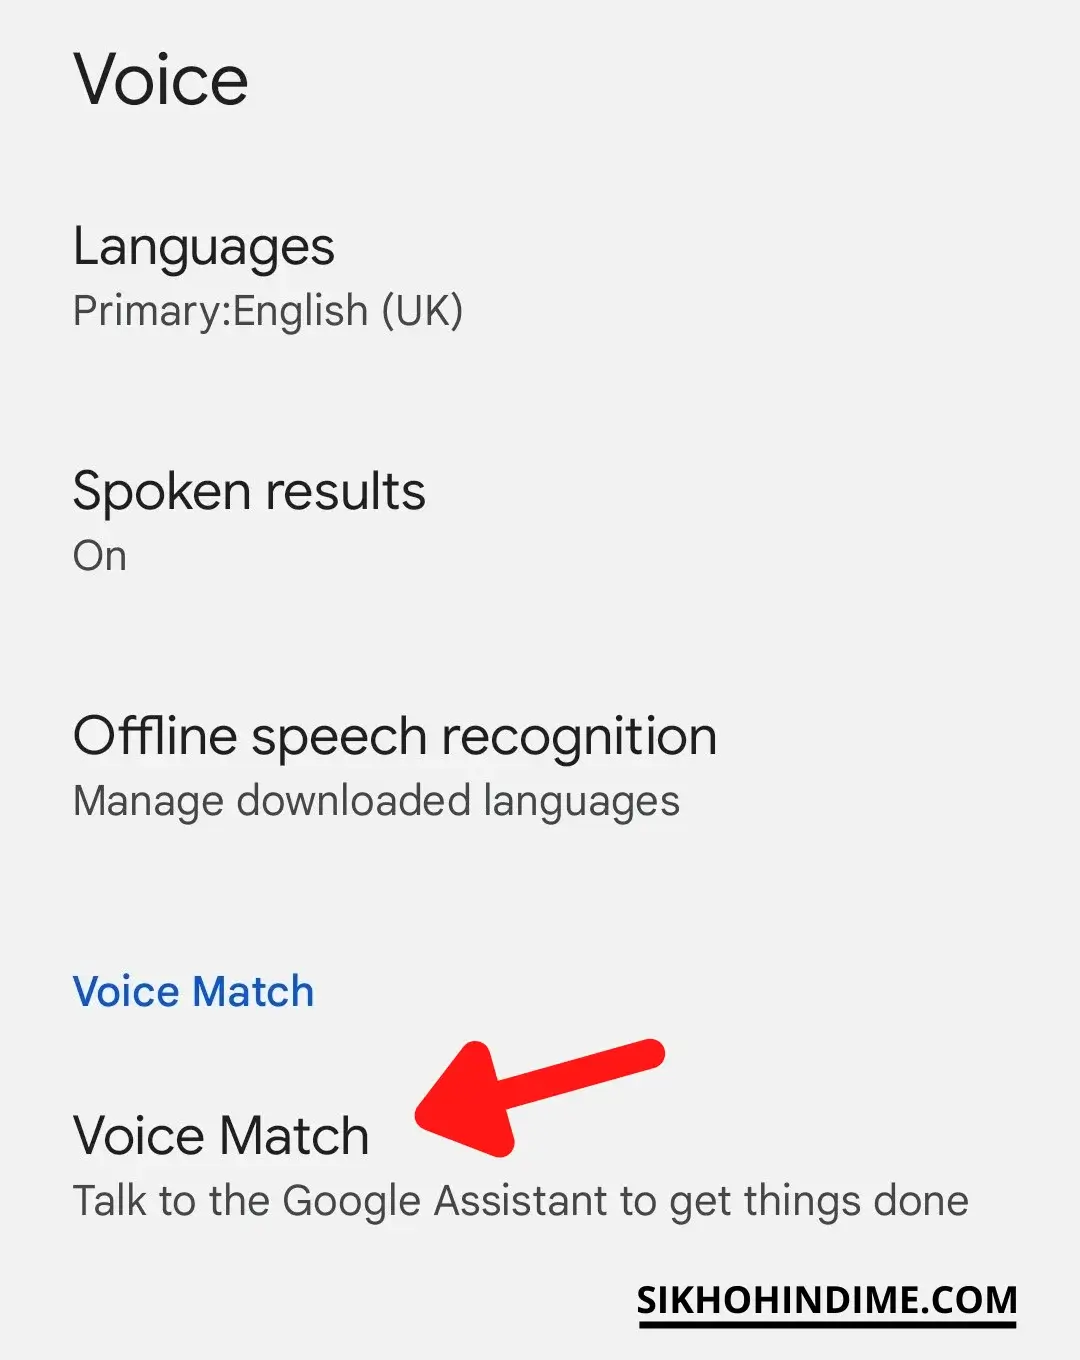 Click on voice match